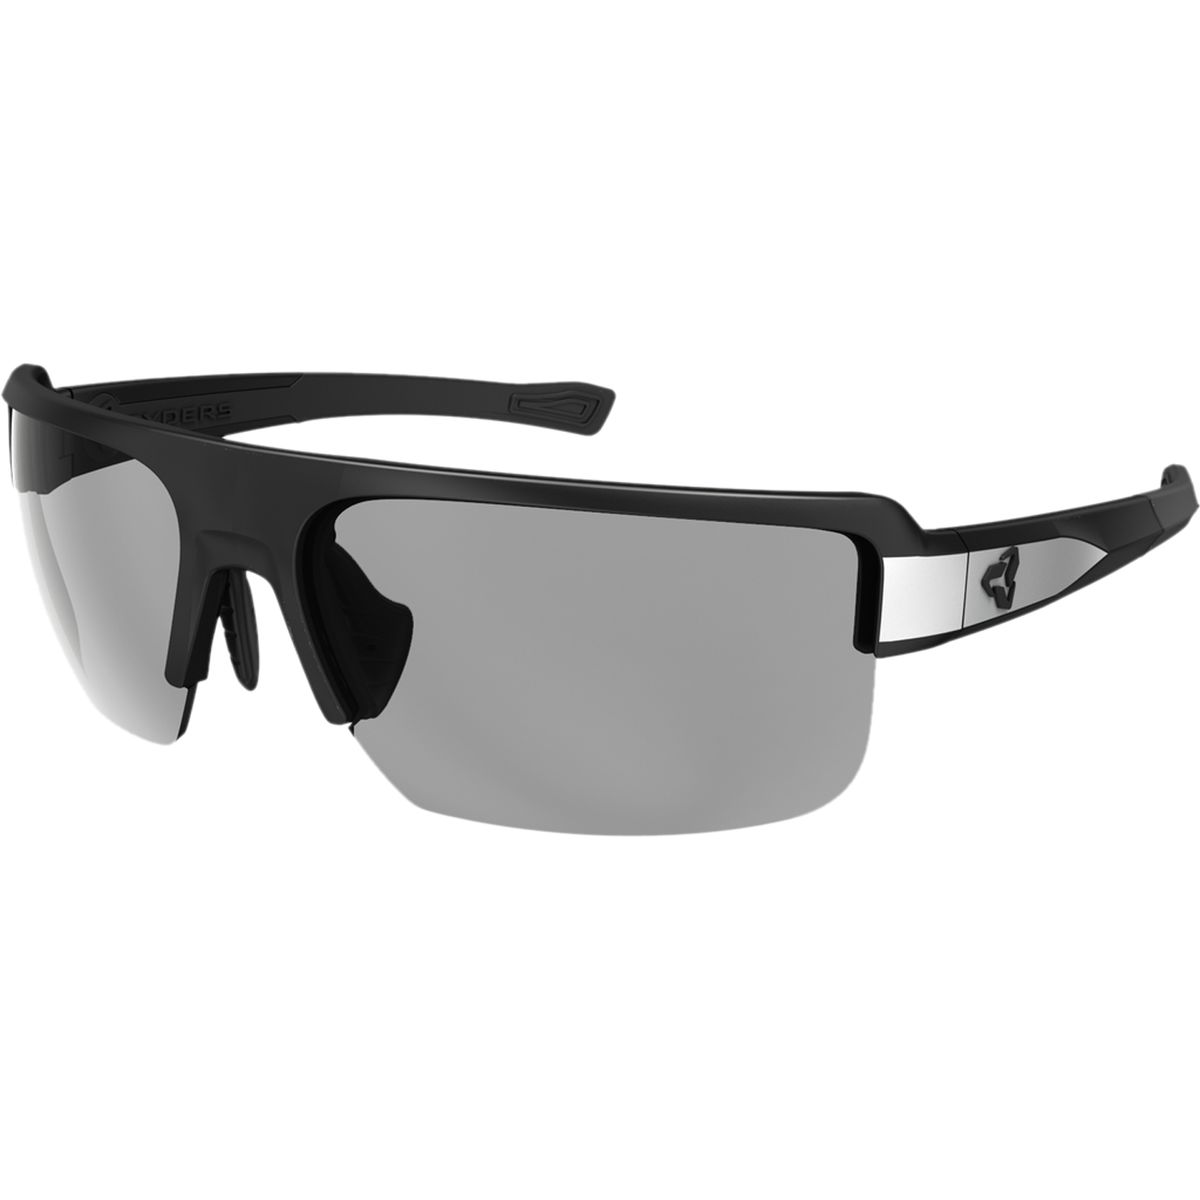 Ryders Eyewear Seventh Sunglasses Polarized Anti fog Lens Men's